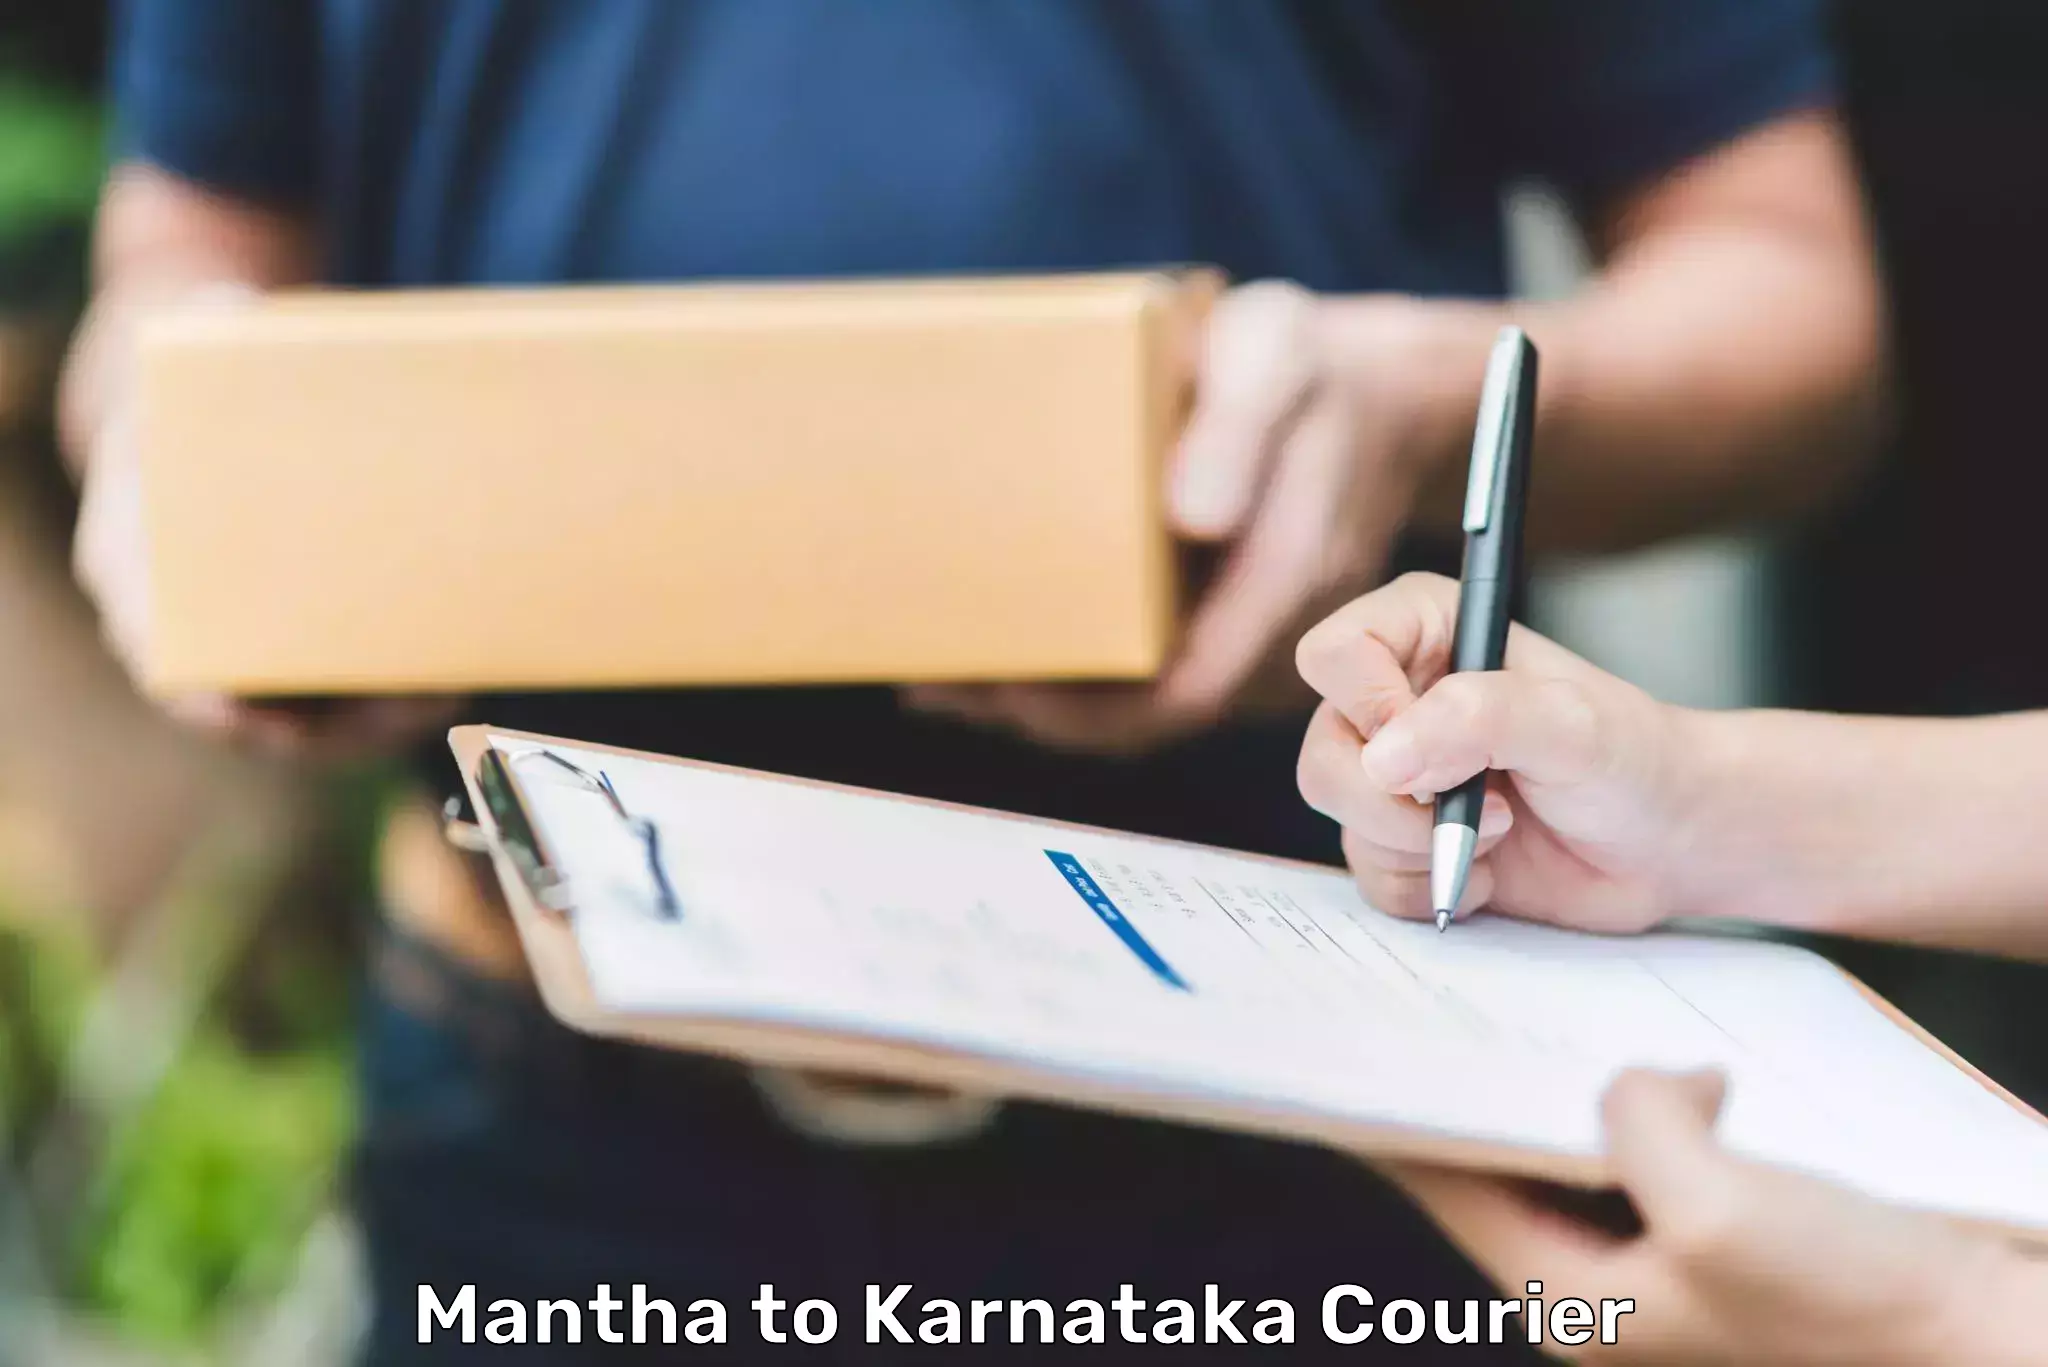 Courier service comparison Mantha to Gadag